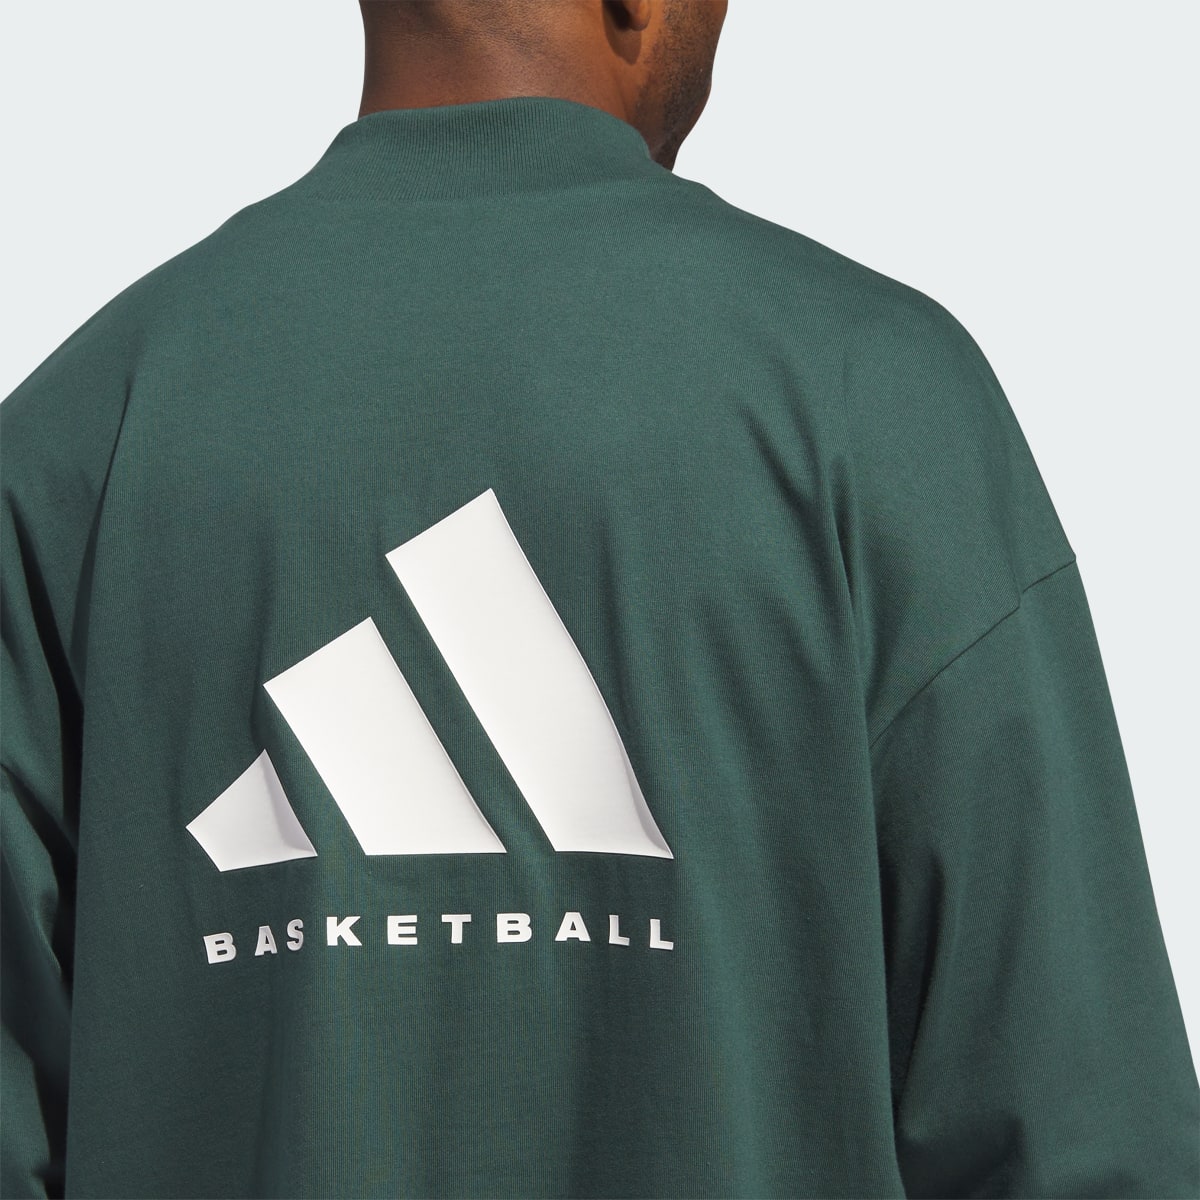 Adidas Basketball Long-Sleeve Top. 7